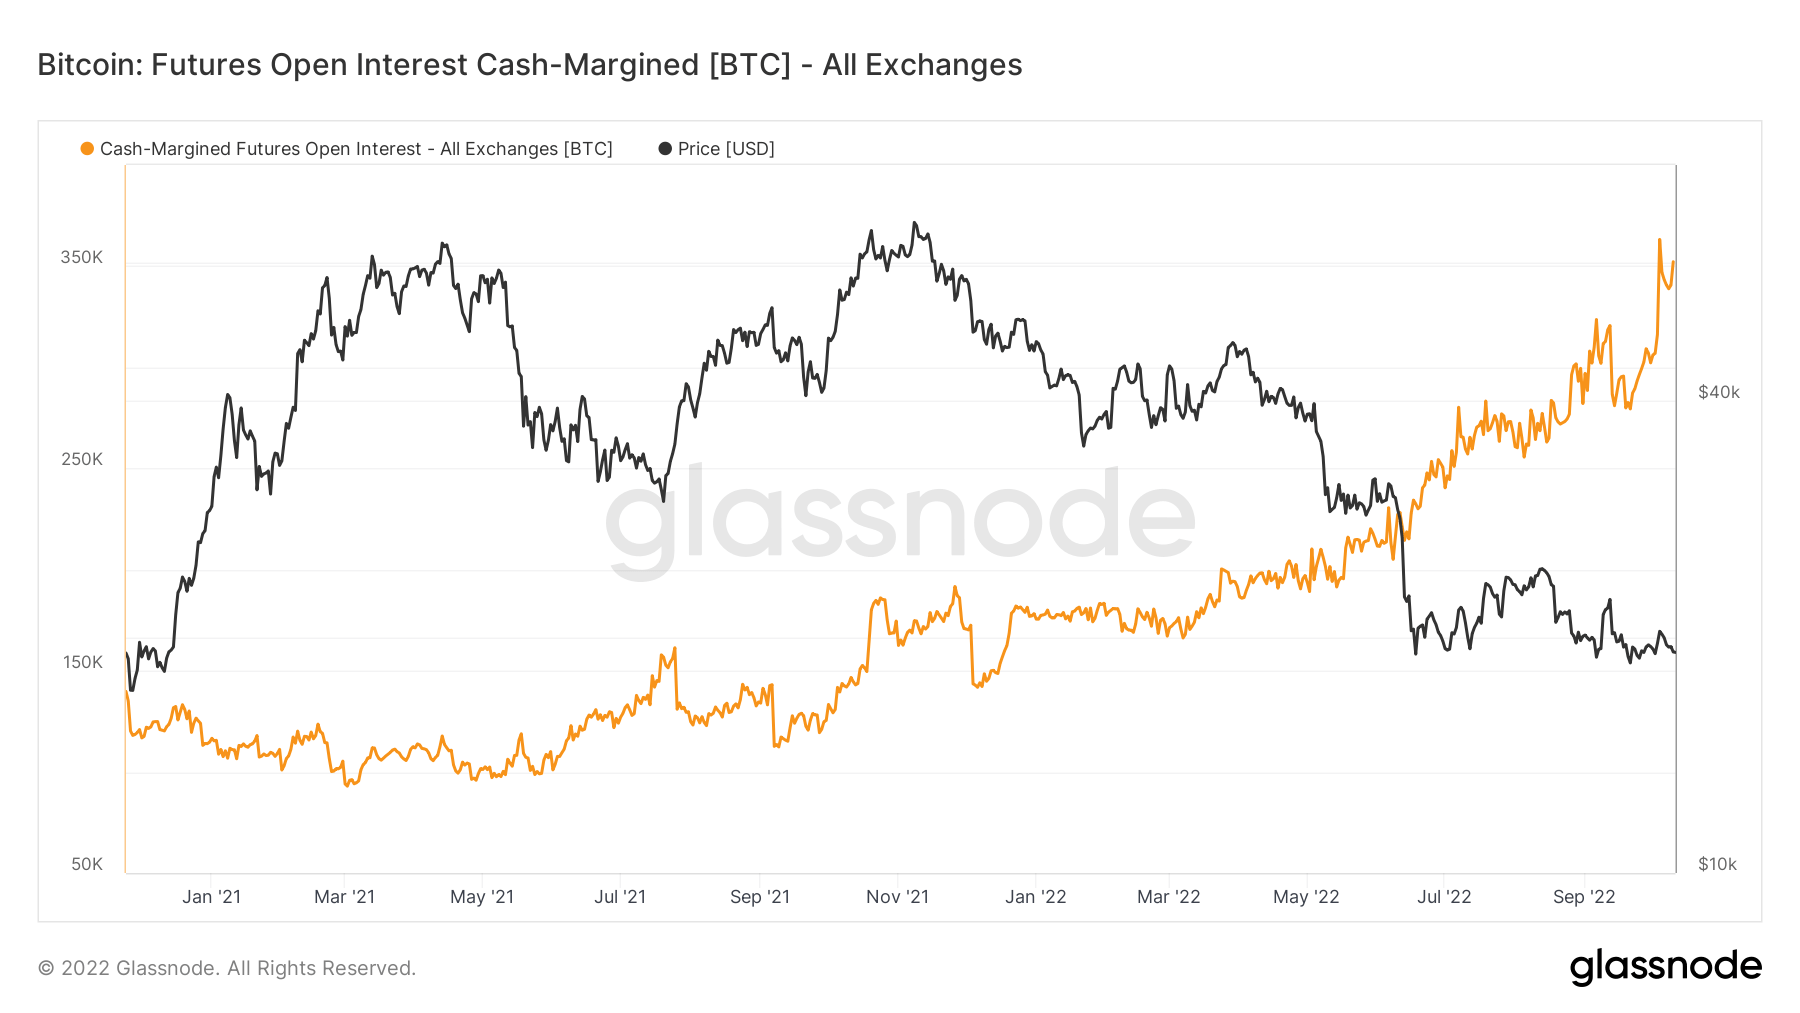 Bitcoin Futures Open Interest Cash Margined (BTC)